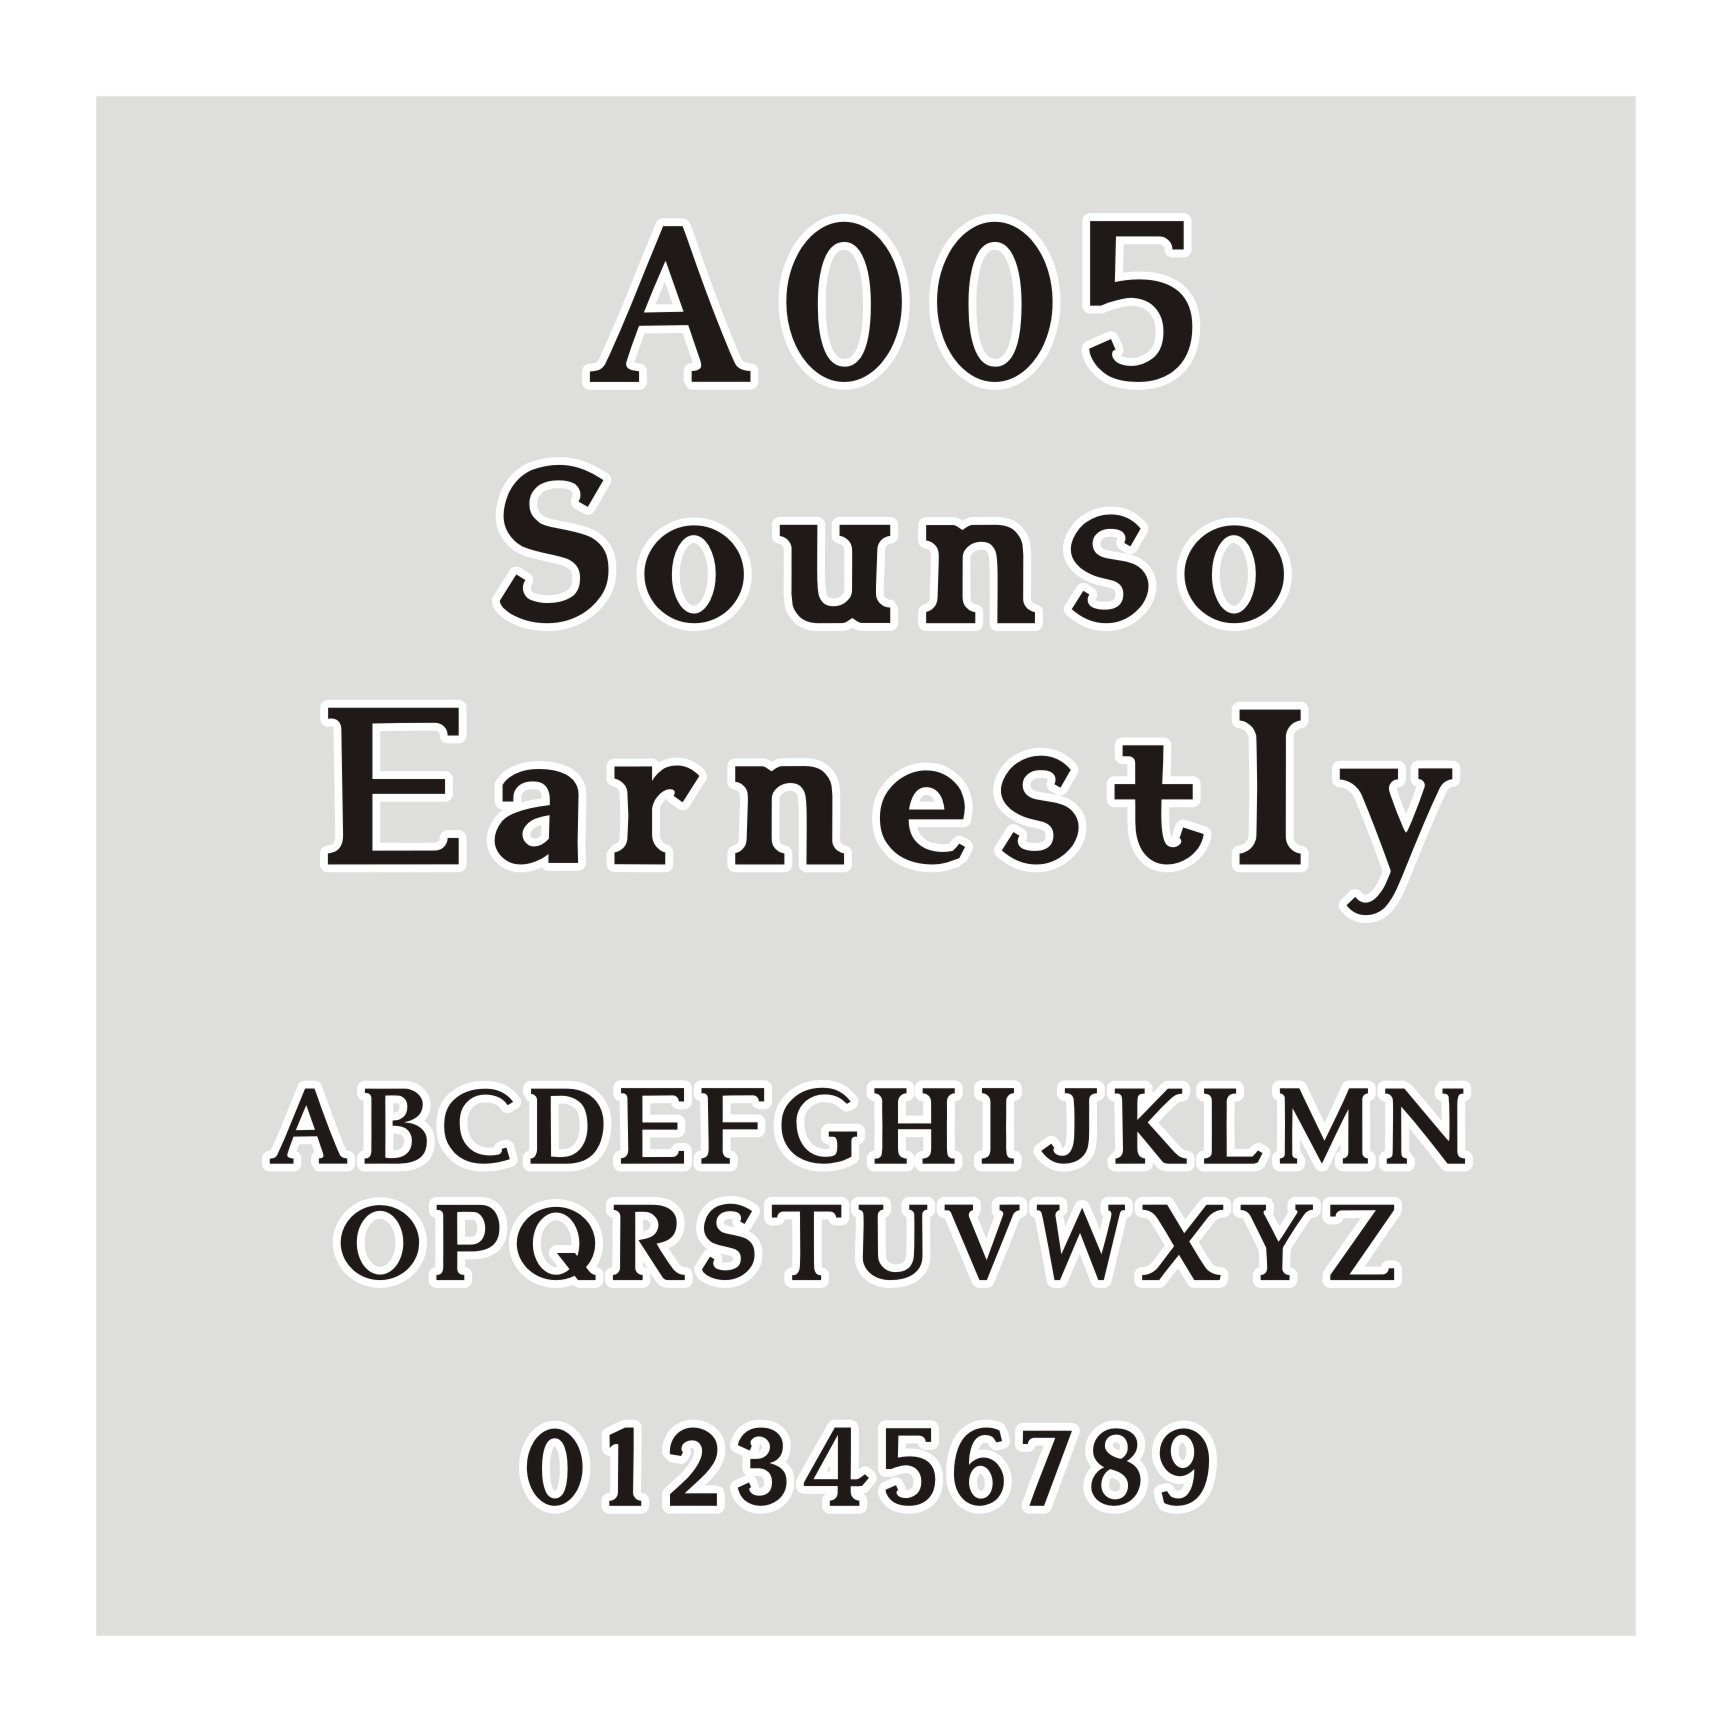 005-Sounso Earnestly